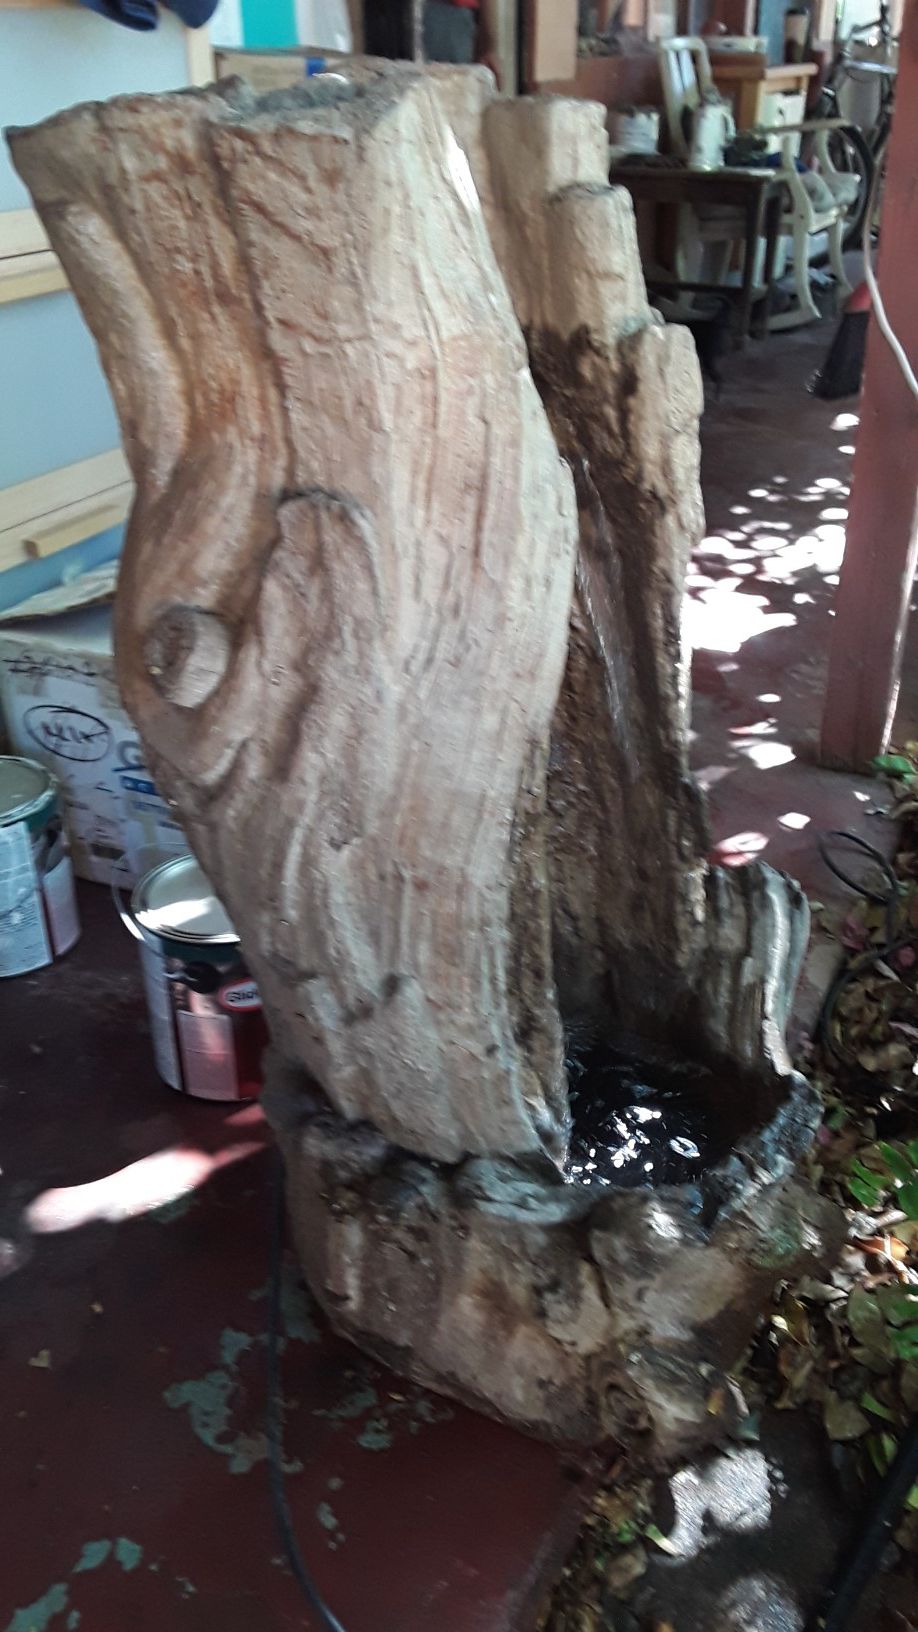 Water fountain tree trunk design 3 feet tall